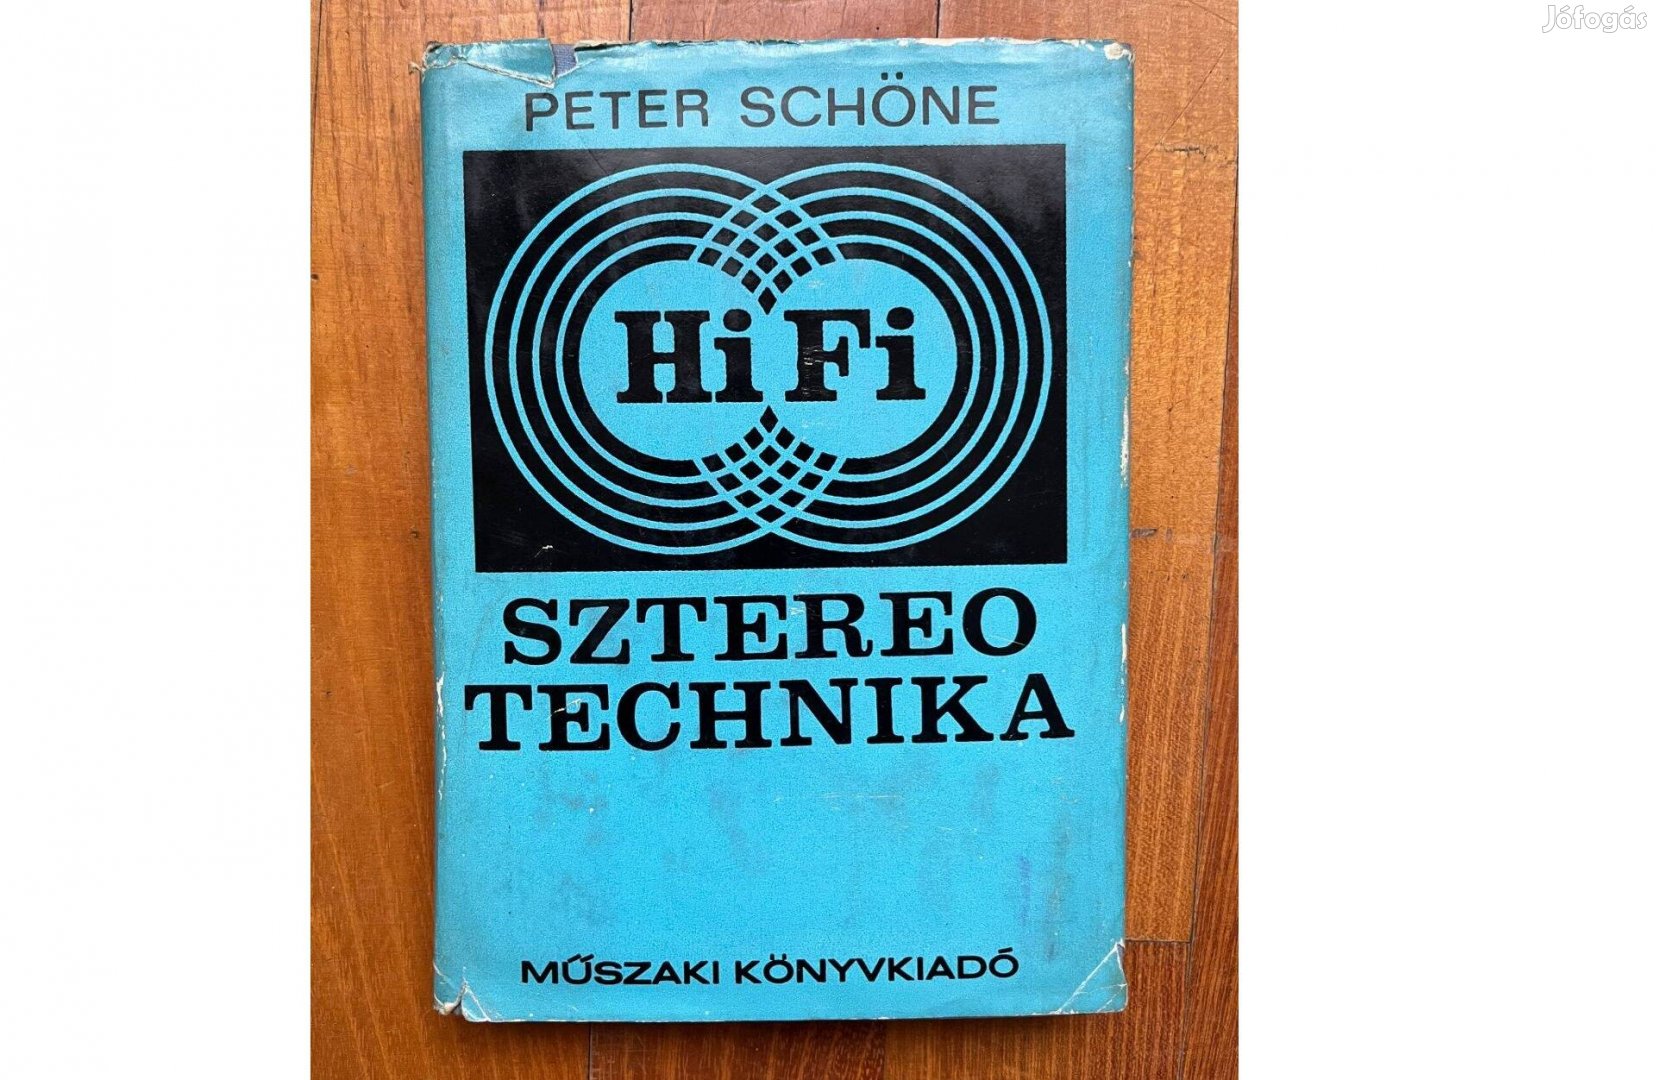 Peter Schöne: Hi-Fi sztereo technika